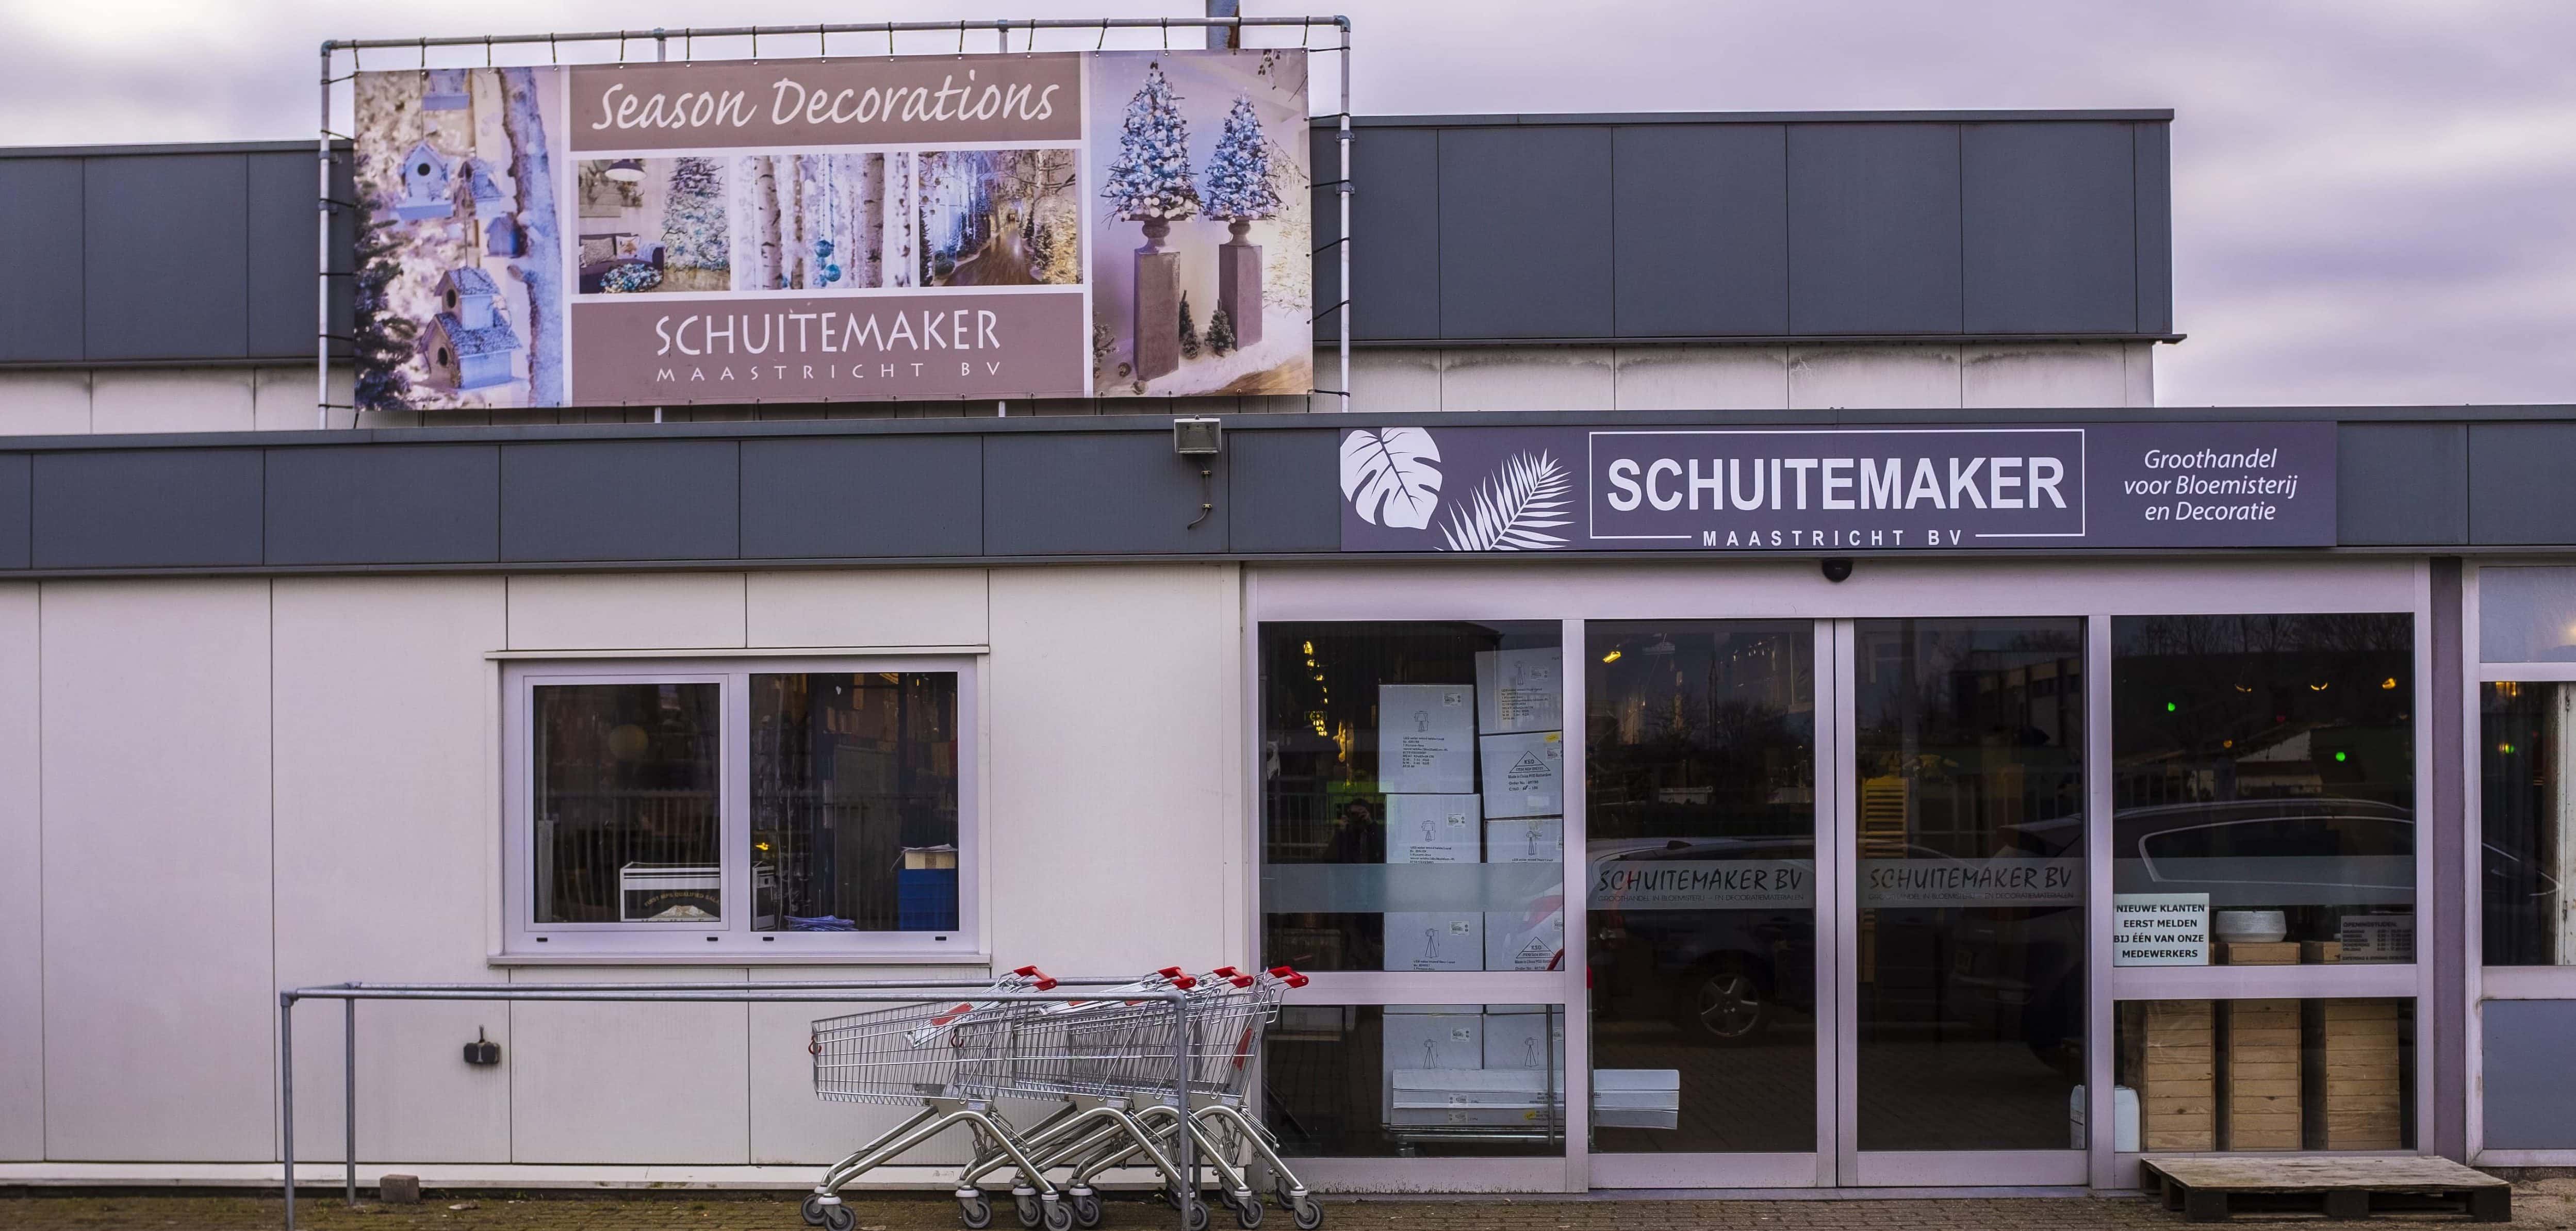 Schuitemaker Maastricht BV ingang